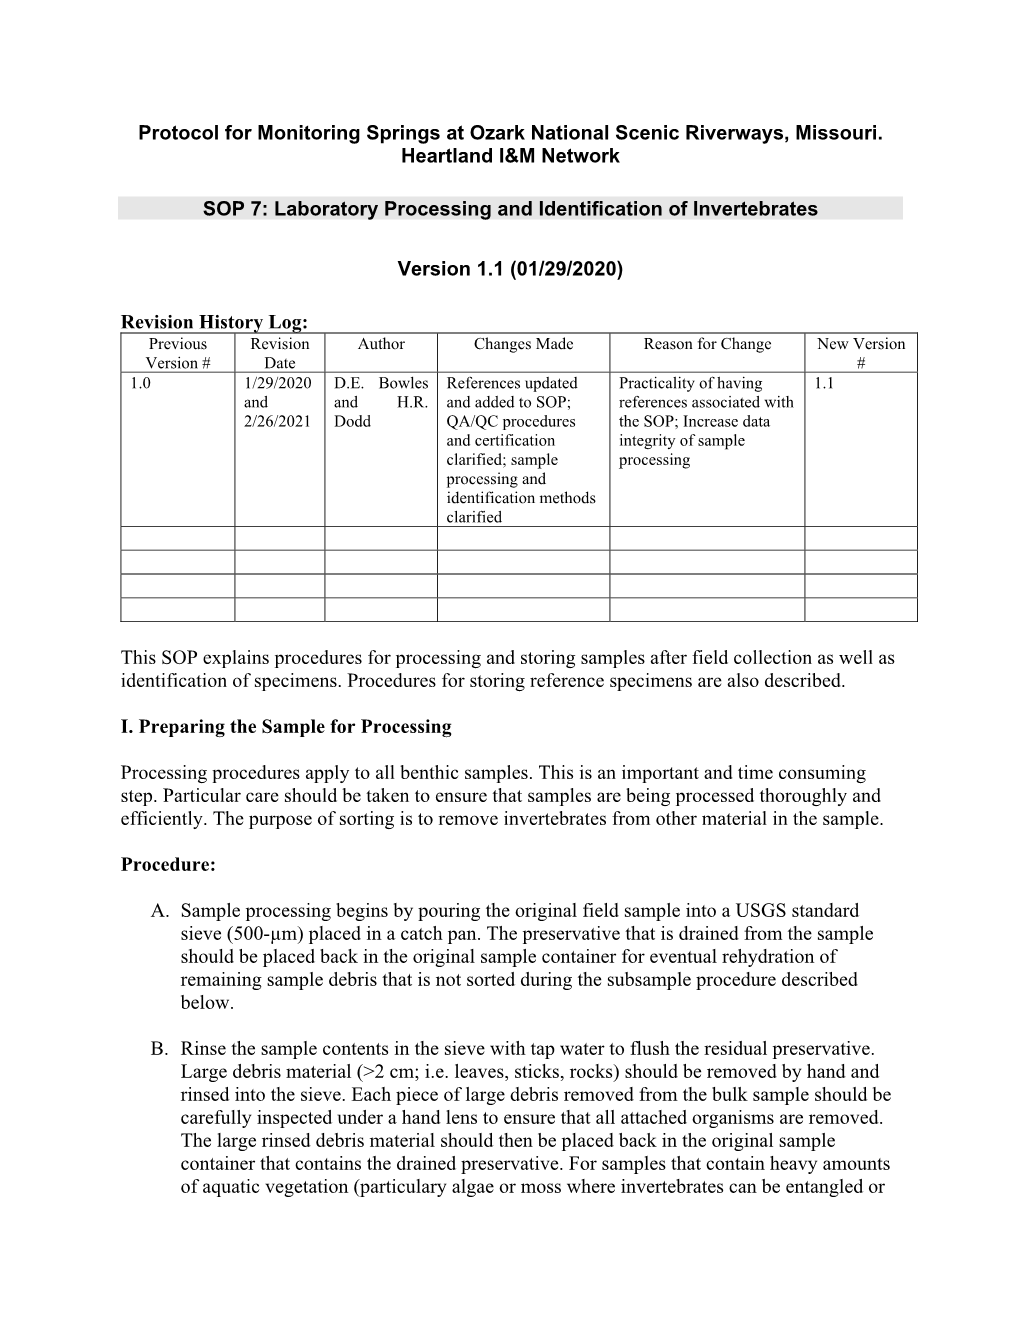 SOP 7 Laboratory Processing and Identification of Invertebrates V1